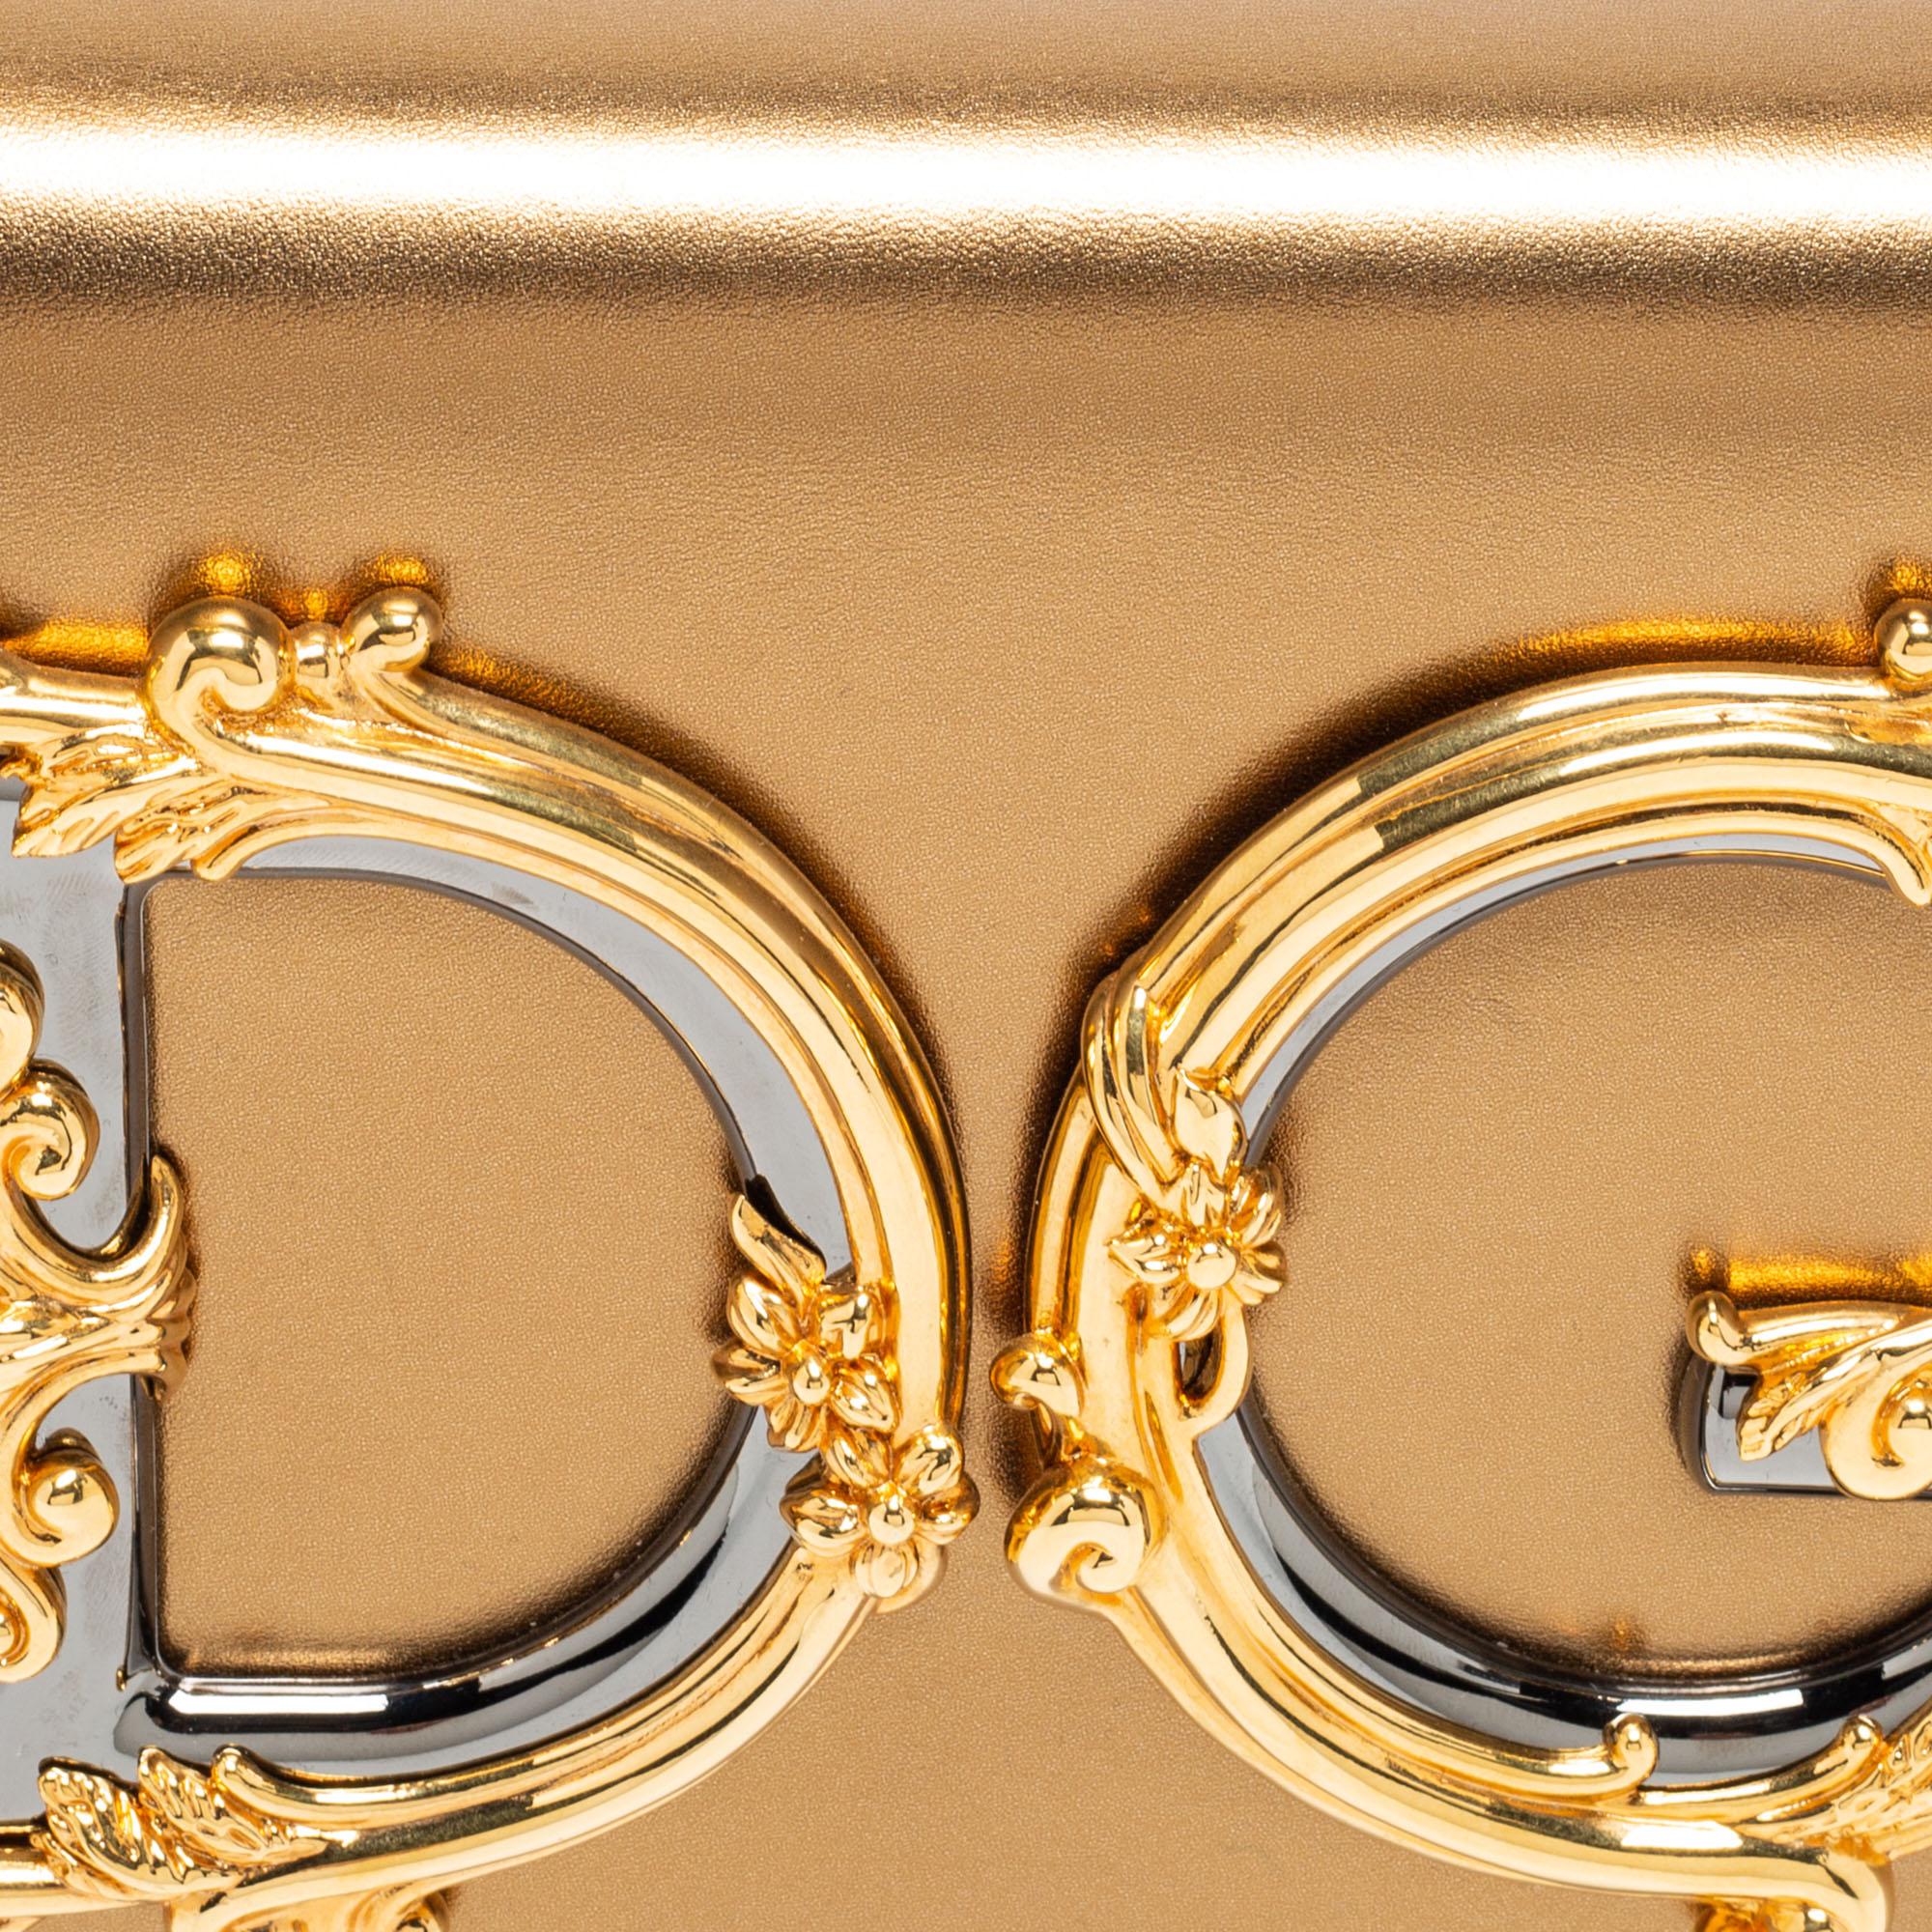 Dolce & Gabbana Metallic Gold Leather DG Girls Shoulder Bag 6